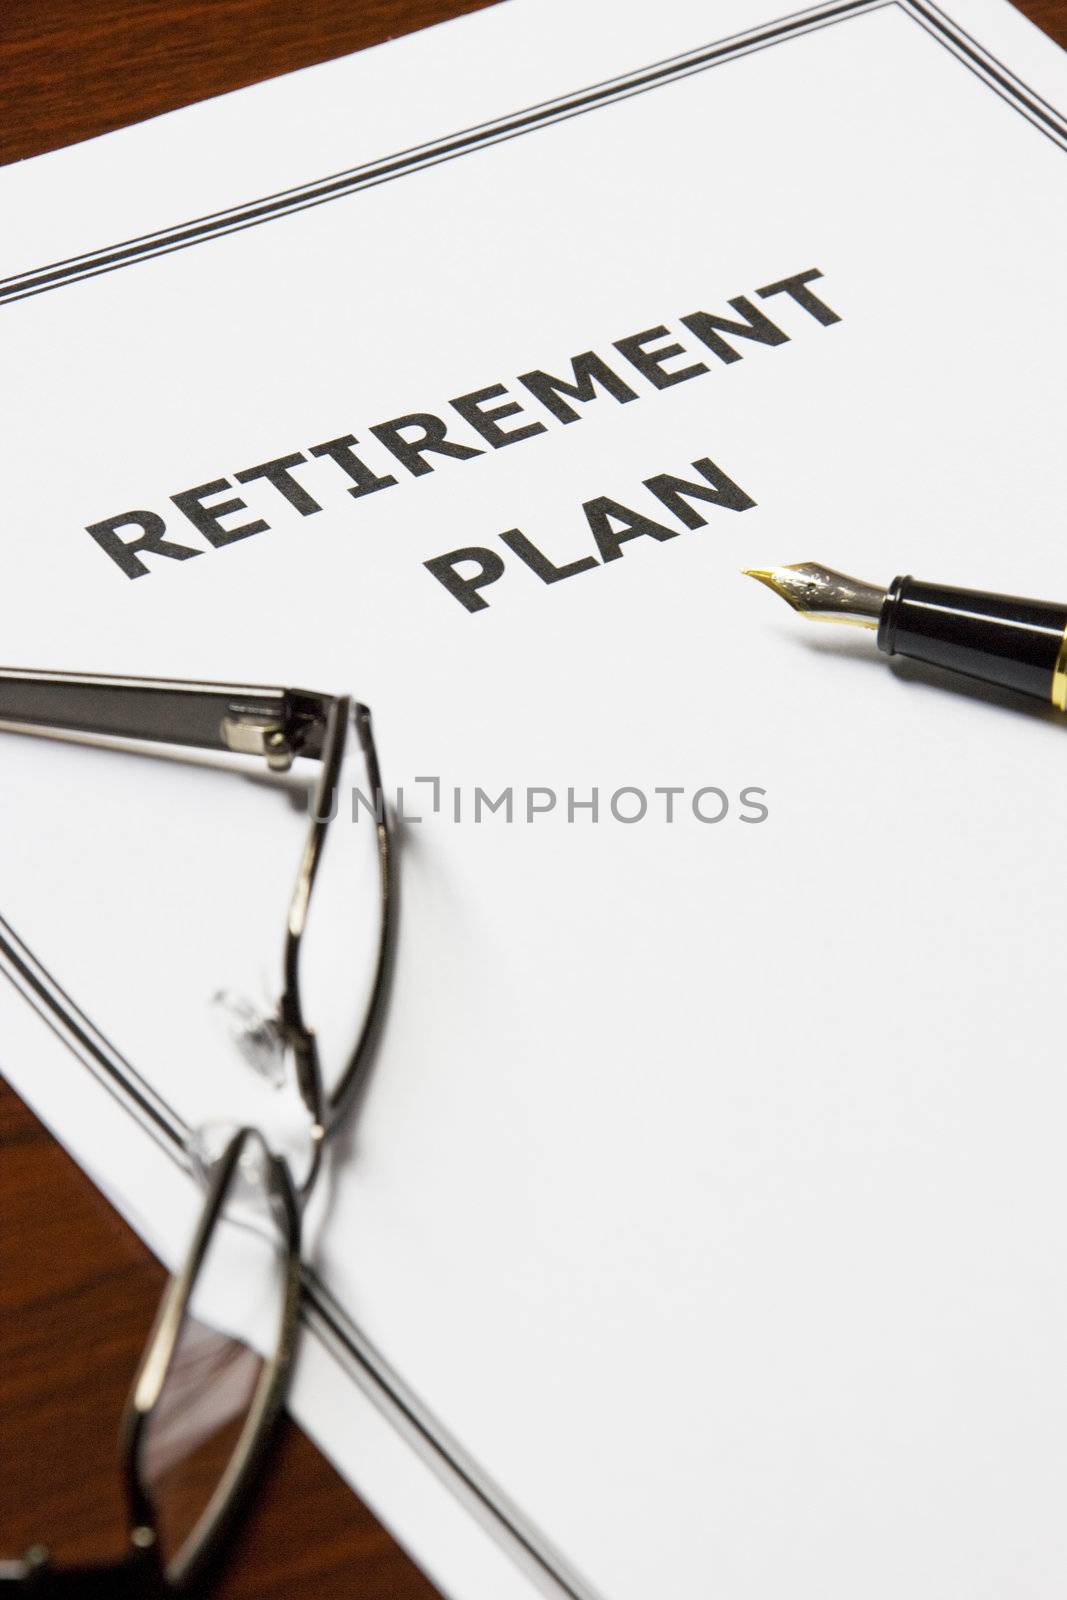 Retirement Plan by shariffc